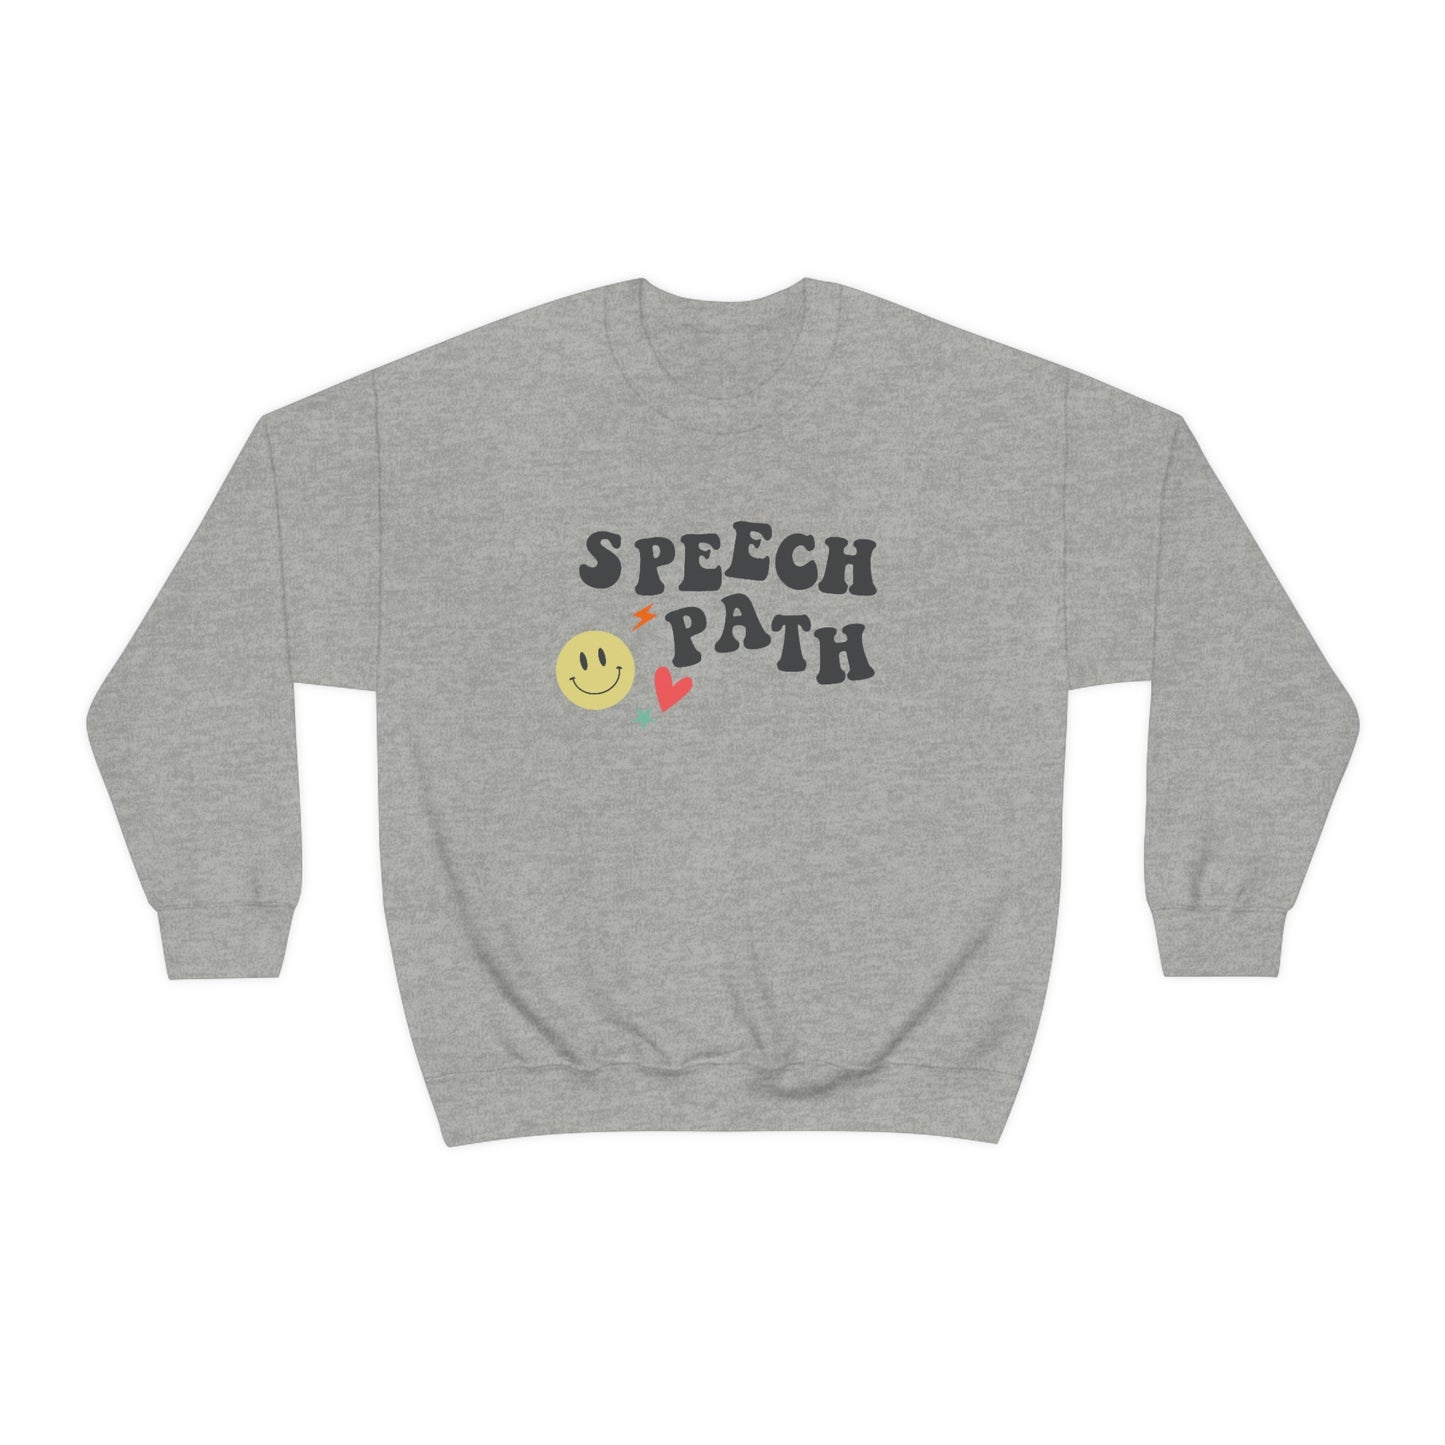 Speech Path Crewneck Sweatshirt